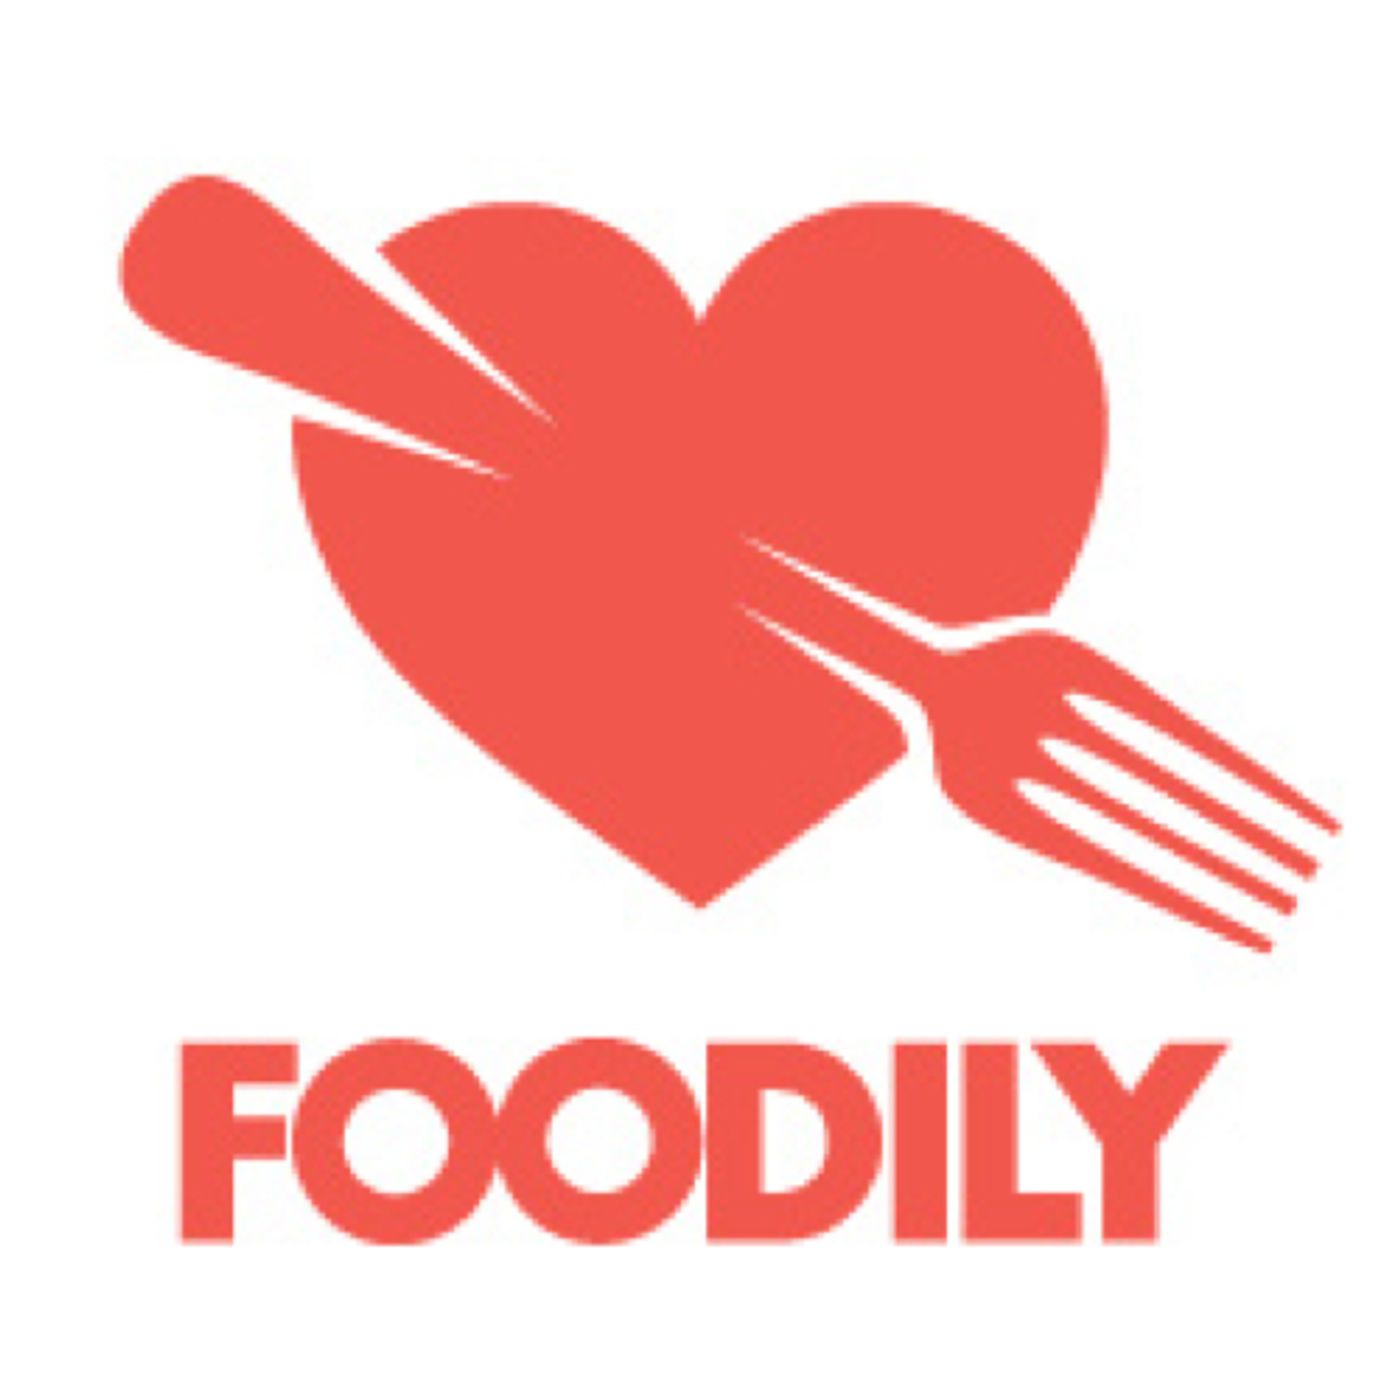 Foodily: Food, I Love You